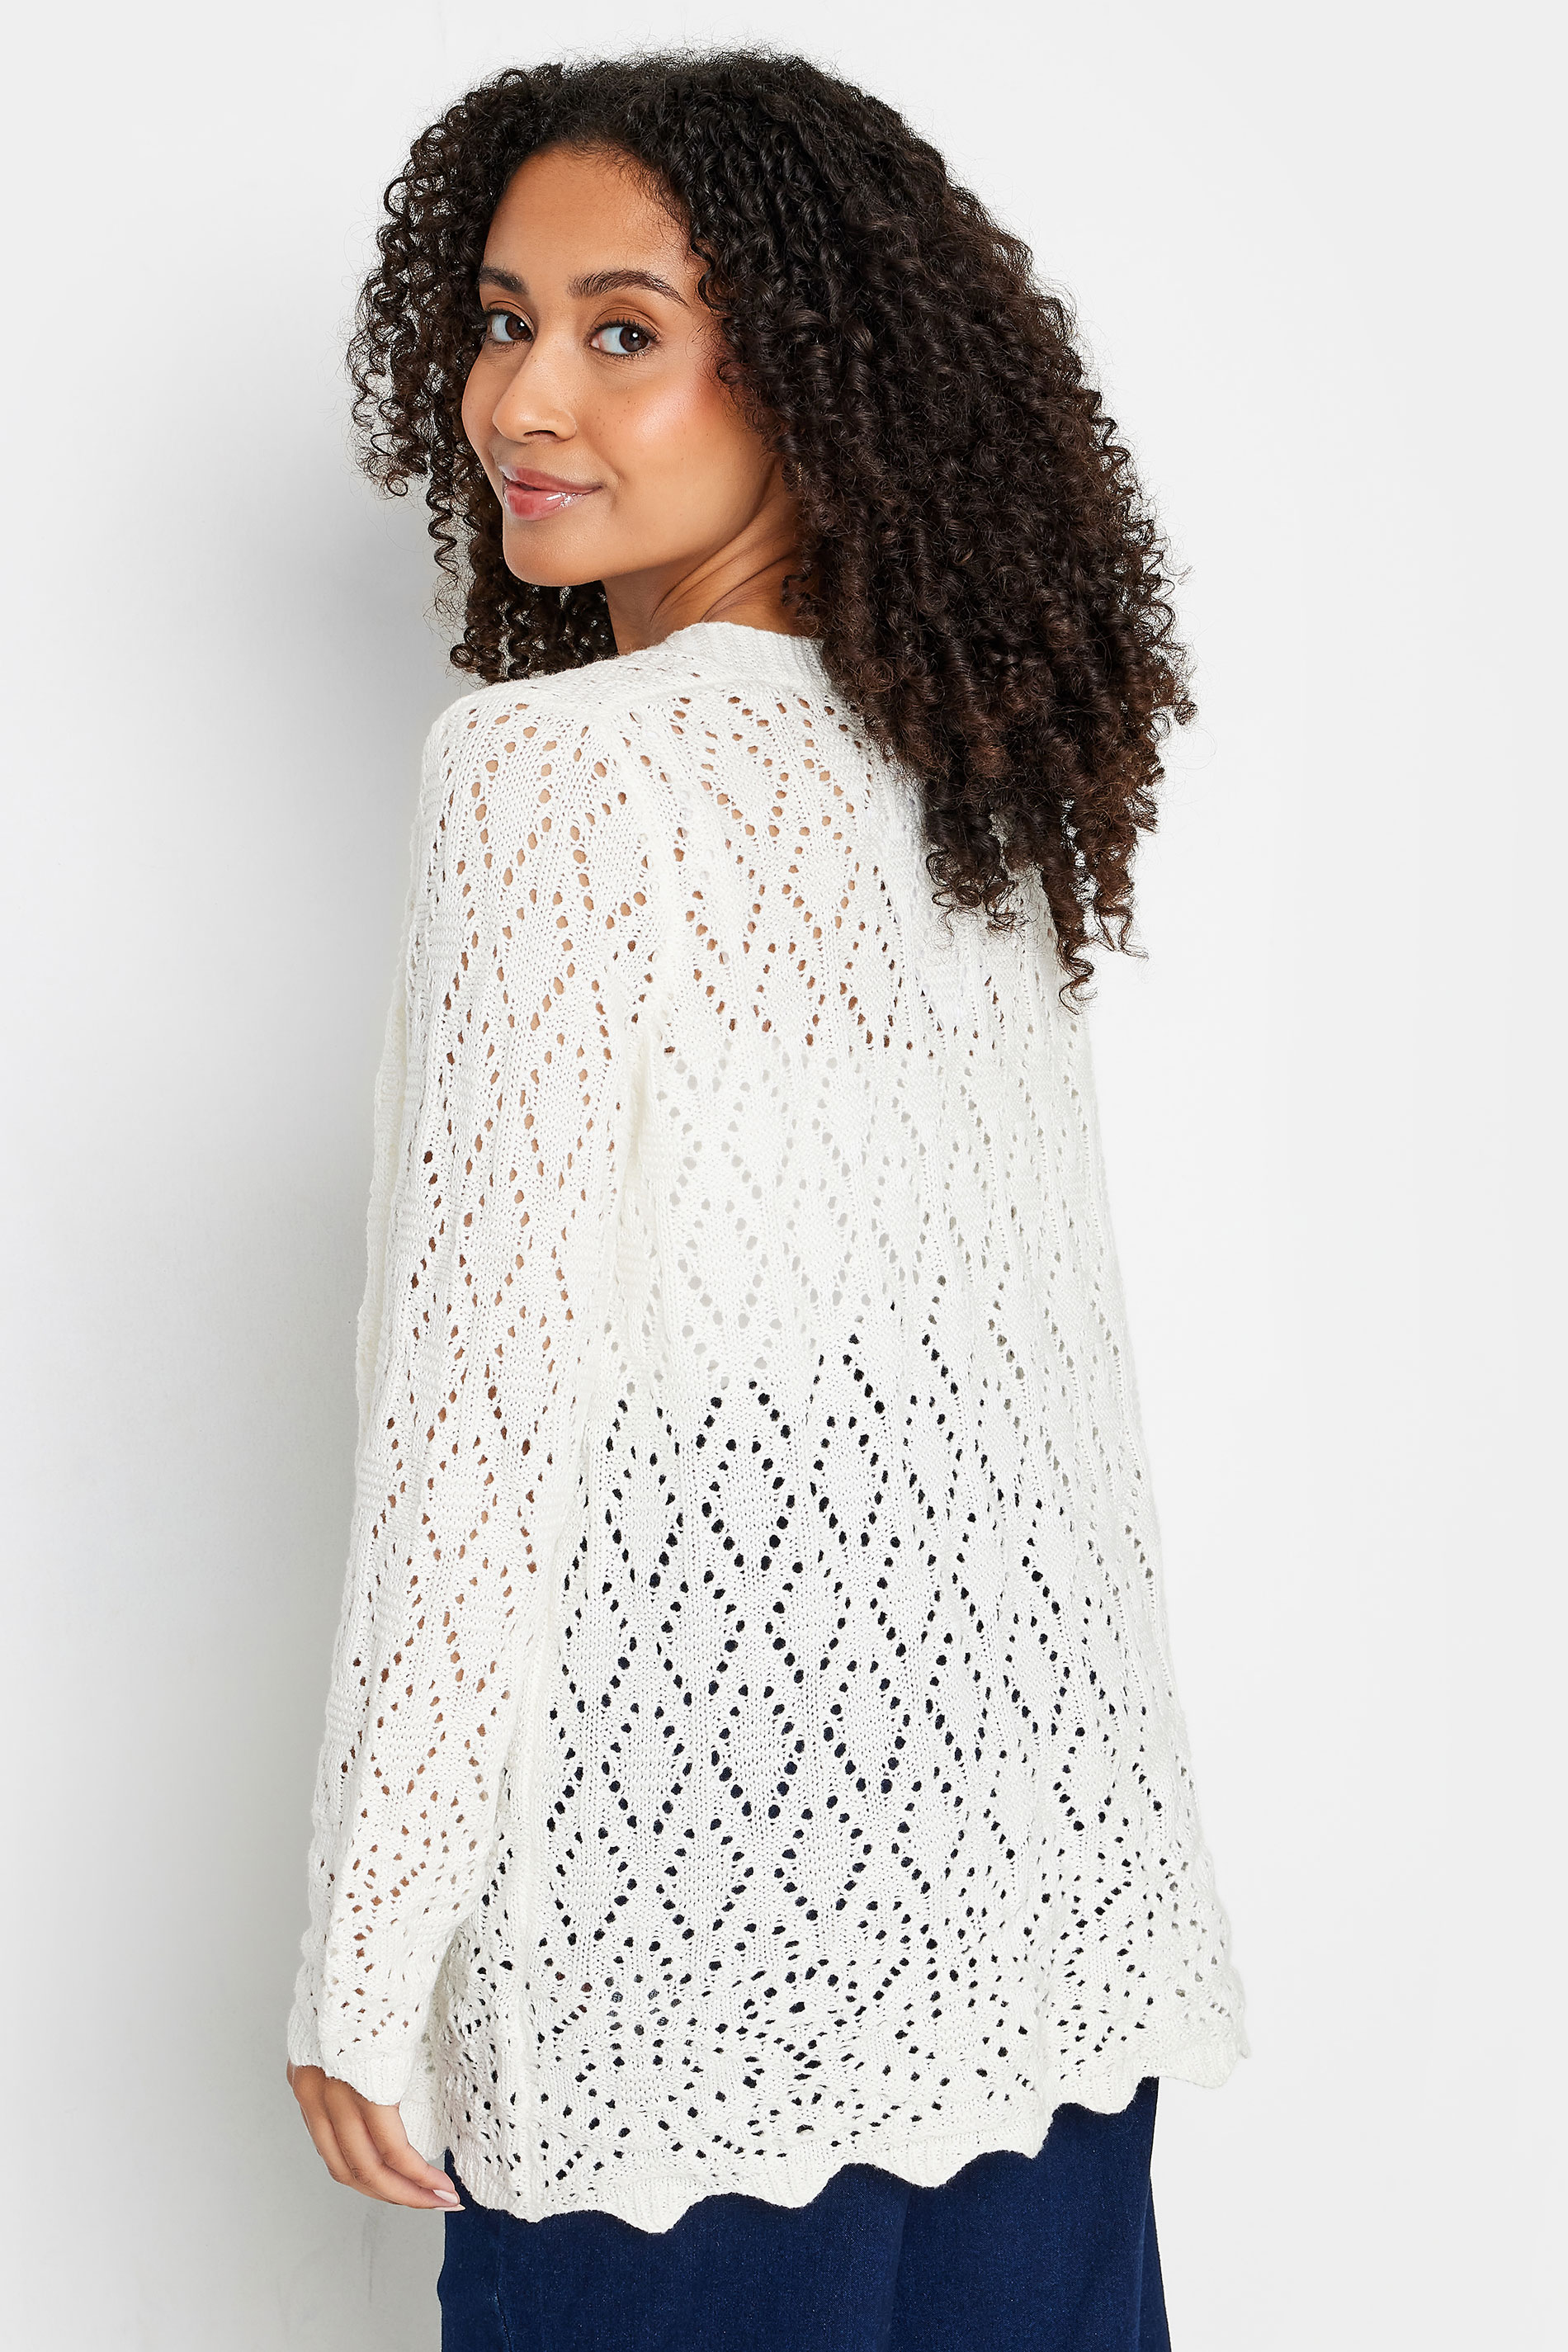 M&Co Petite Ivory White Crochet Cardigan | M&Co 3